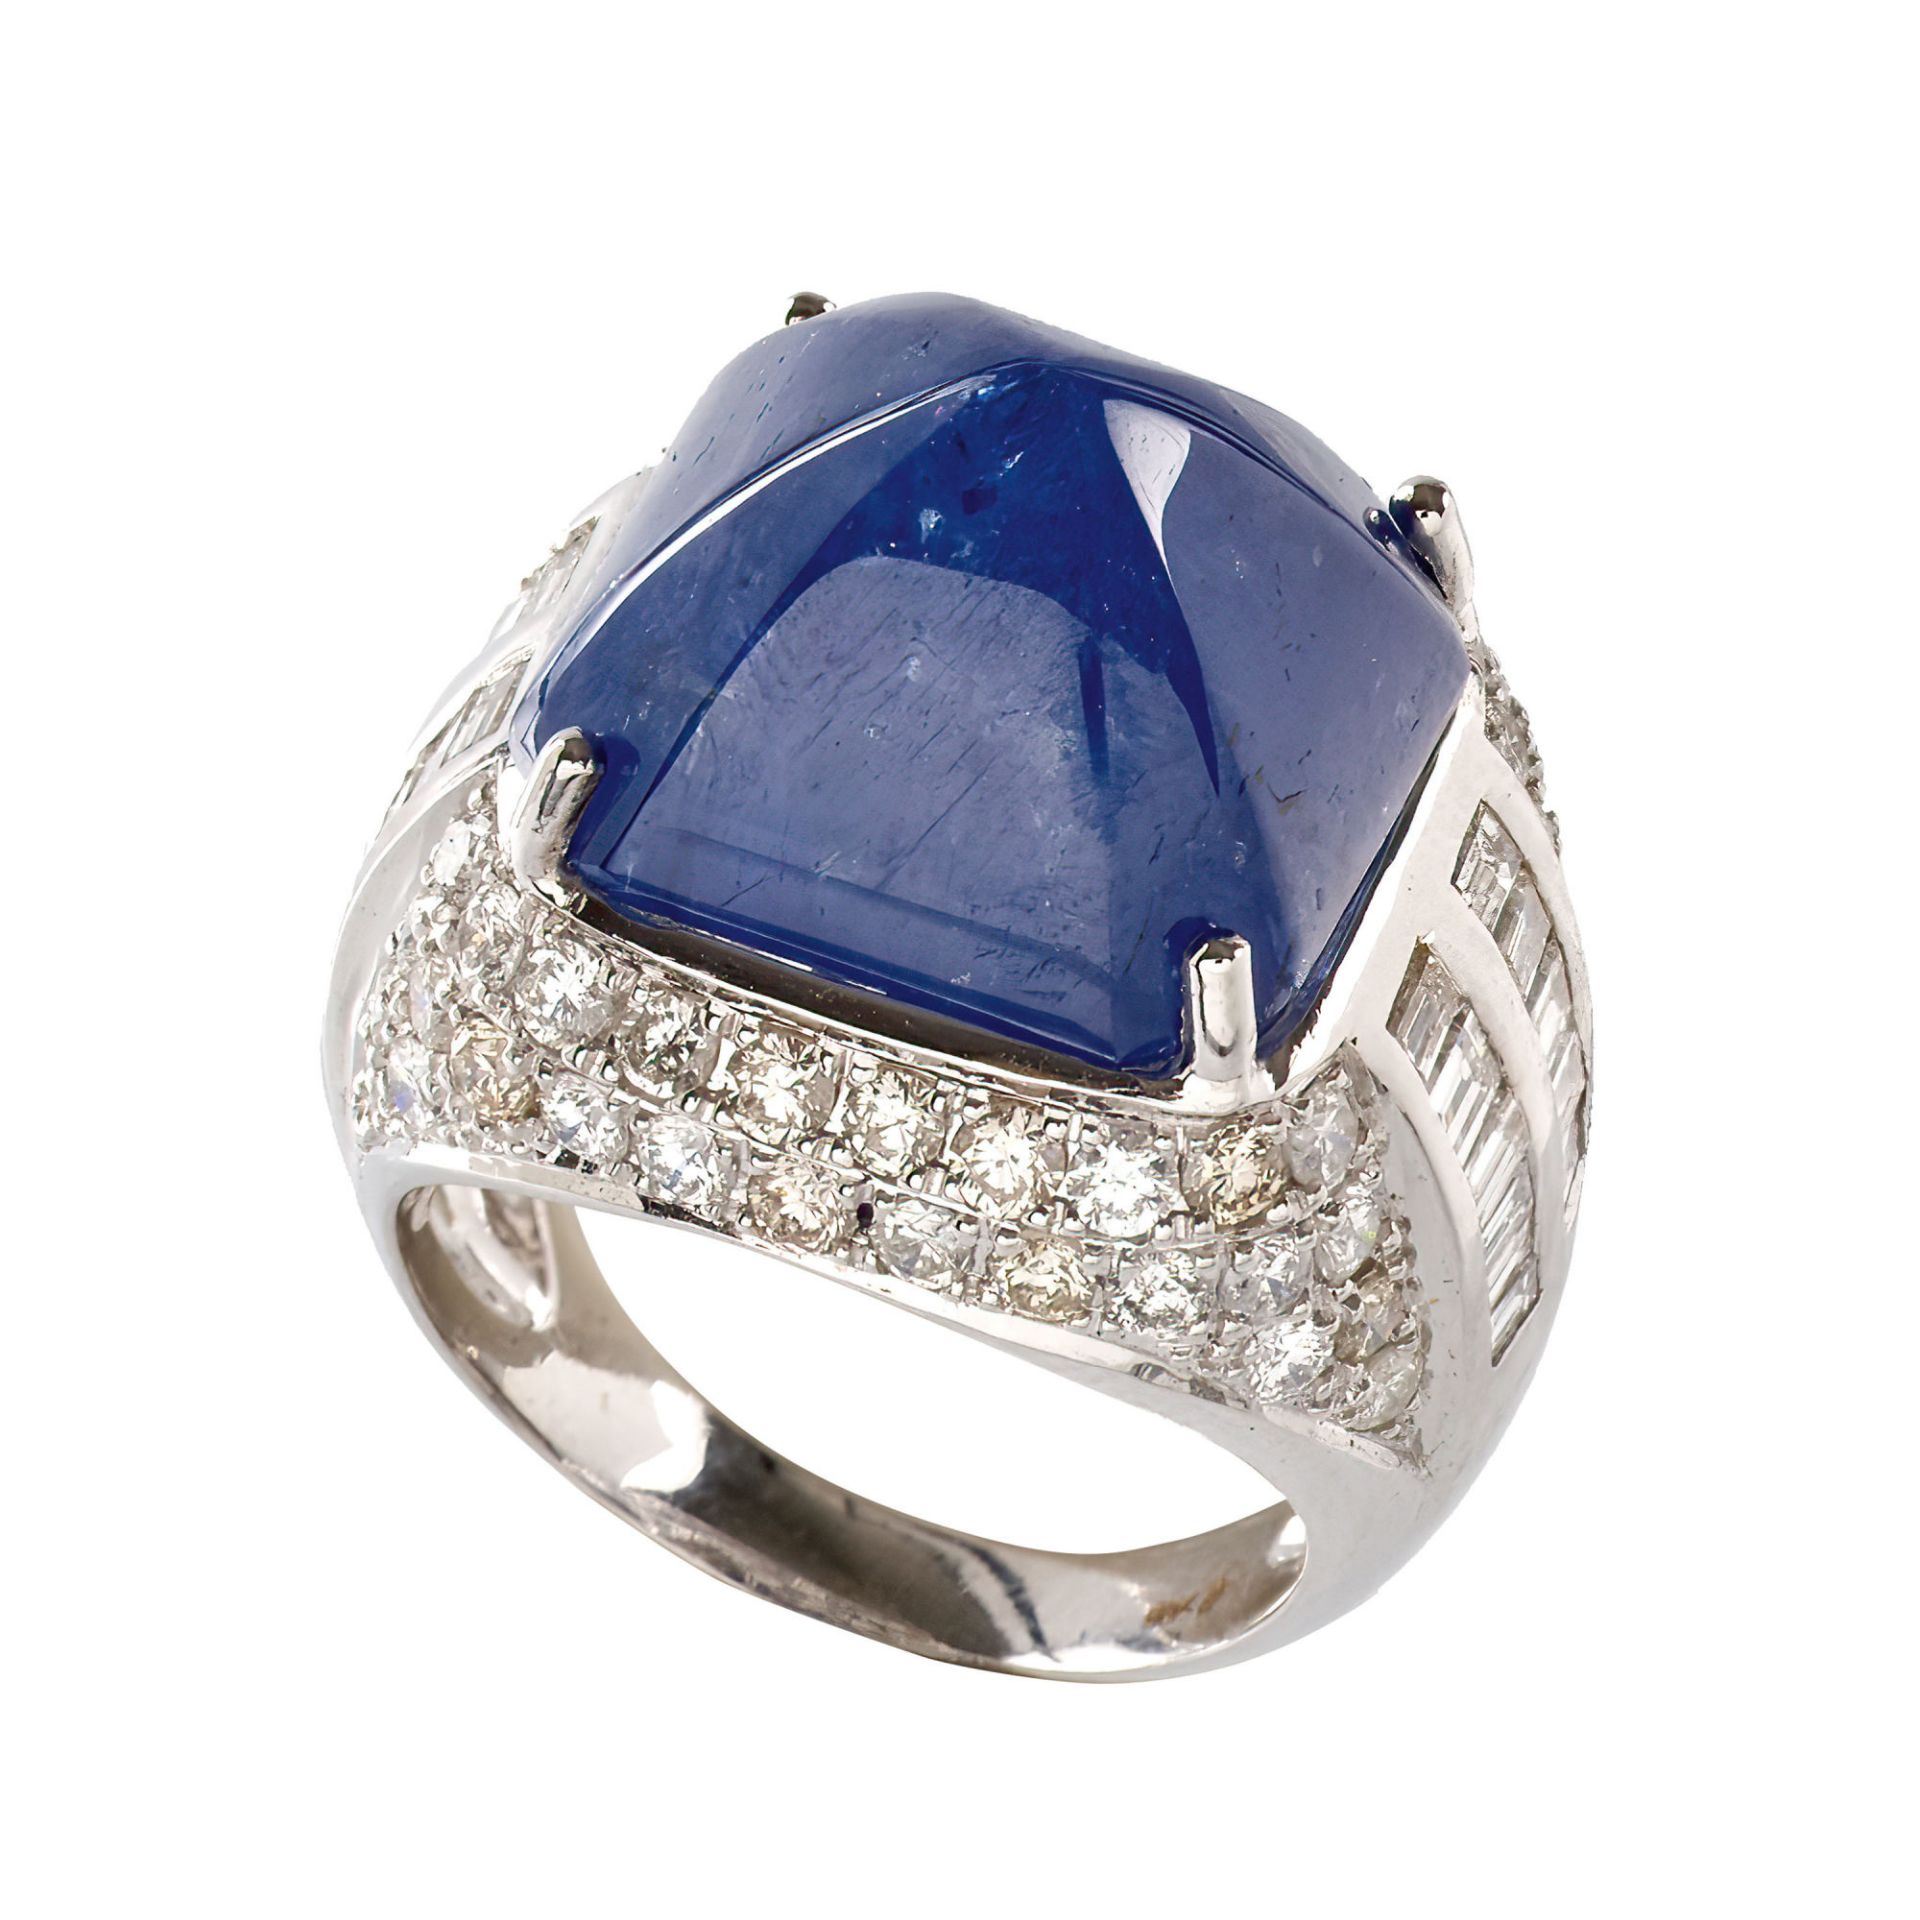 SAPHIR-DIAMANT-RING / Sapphire-diamond-ring 